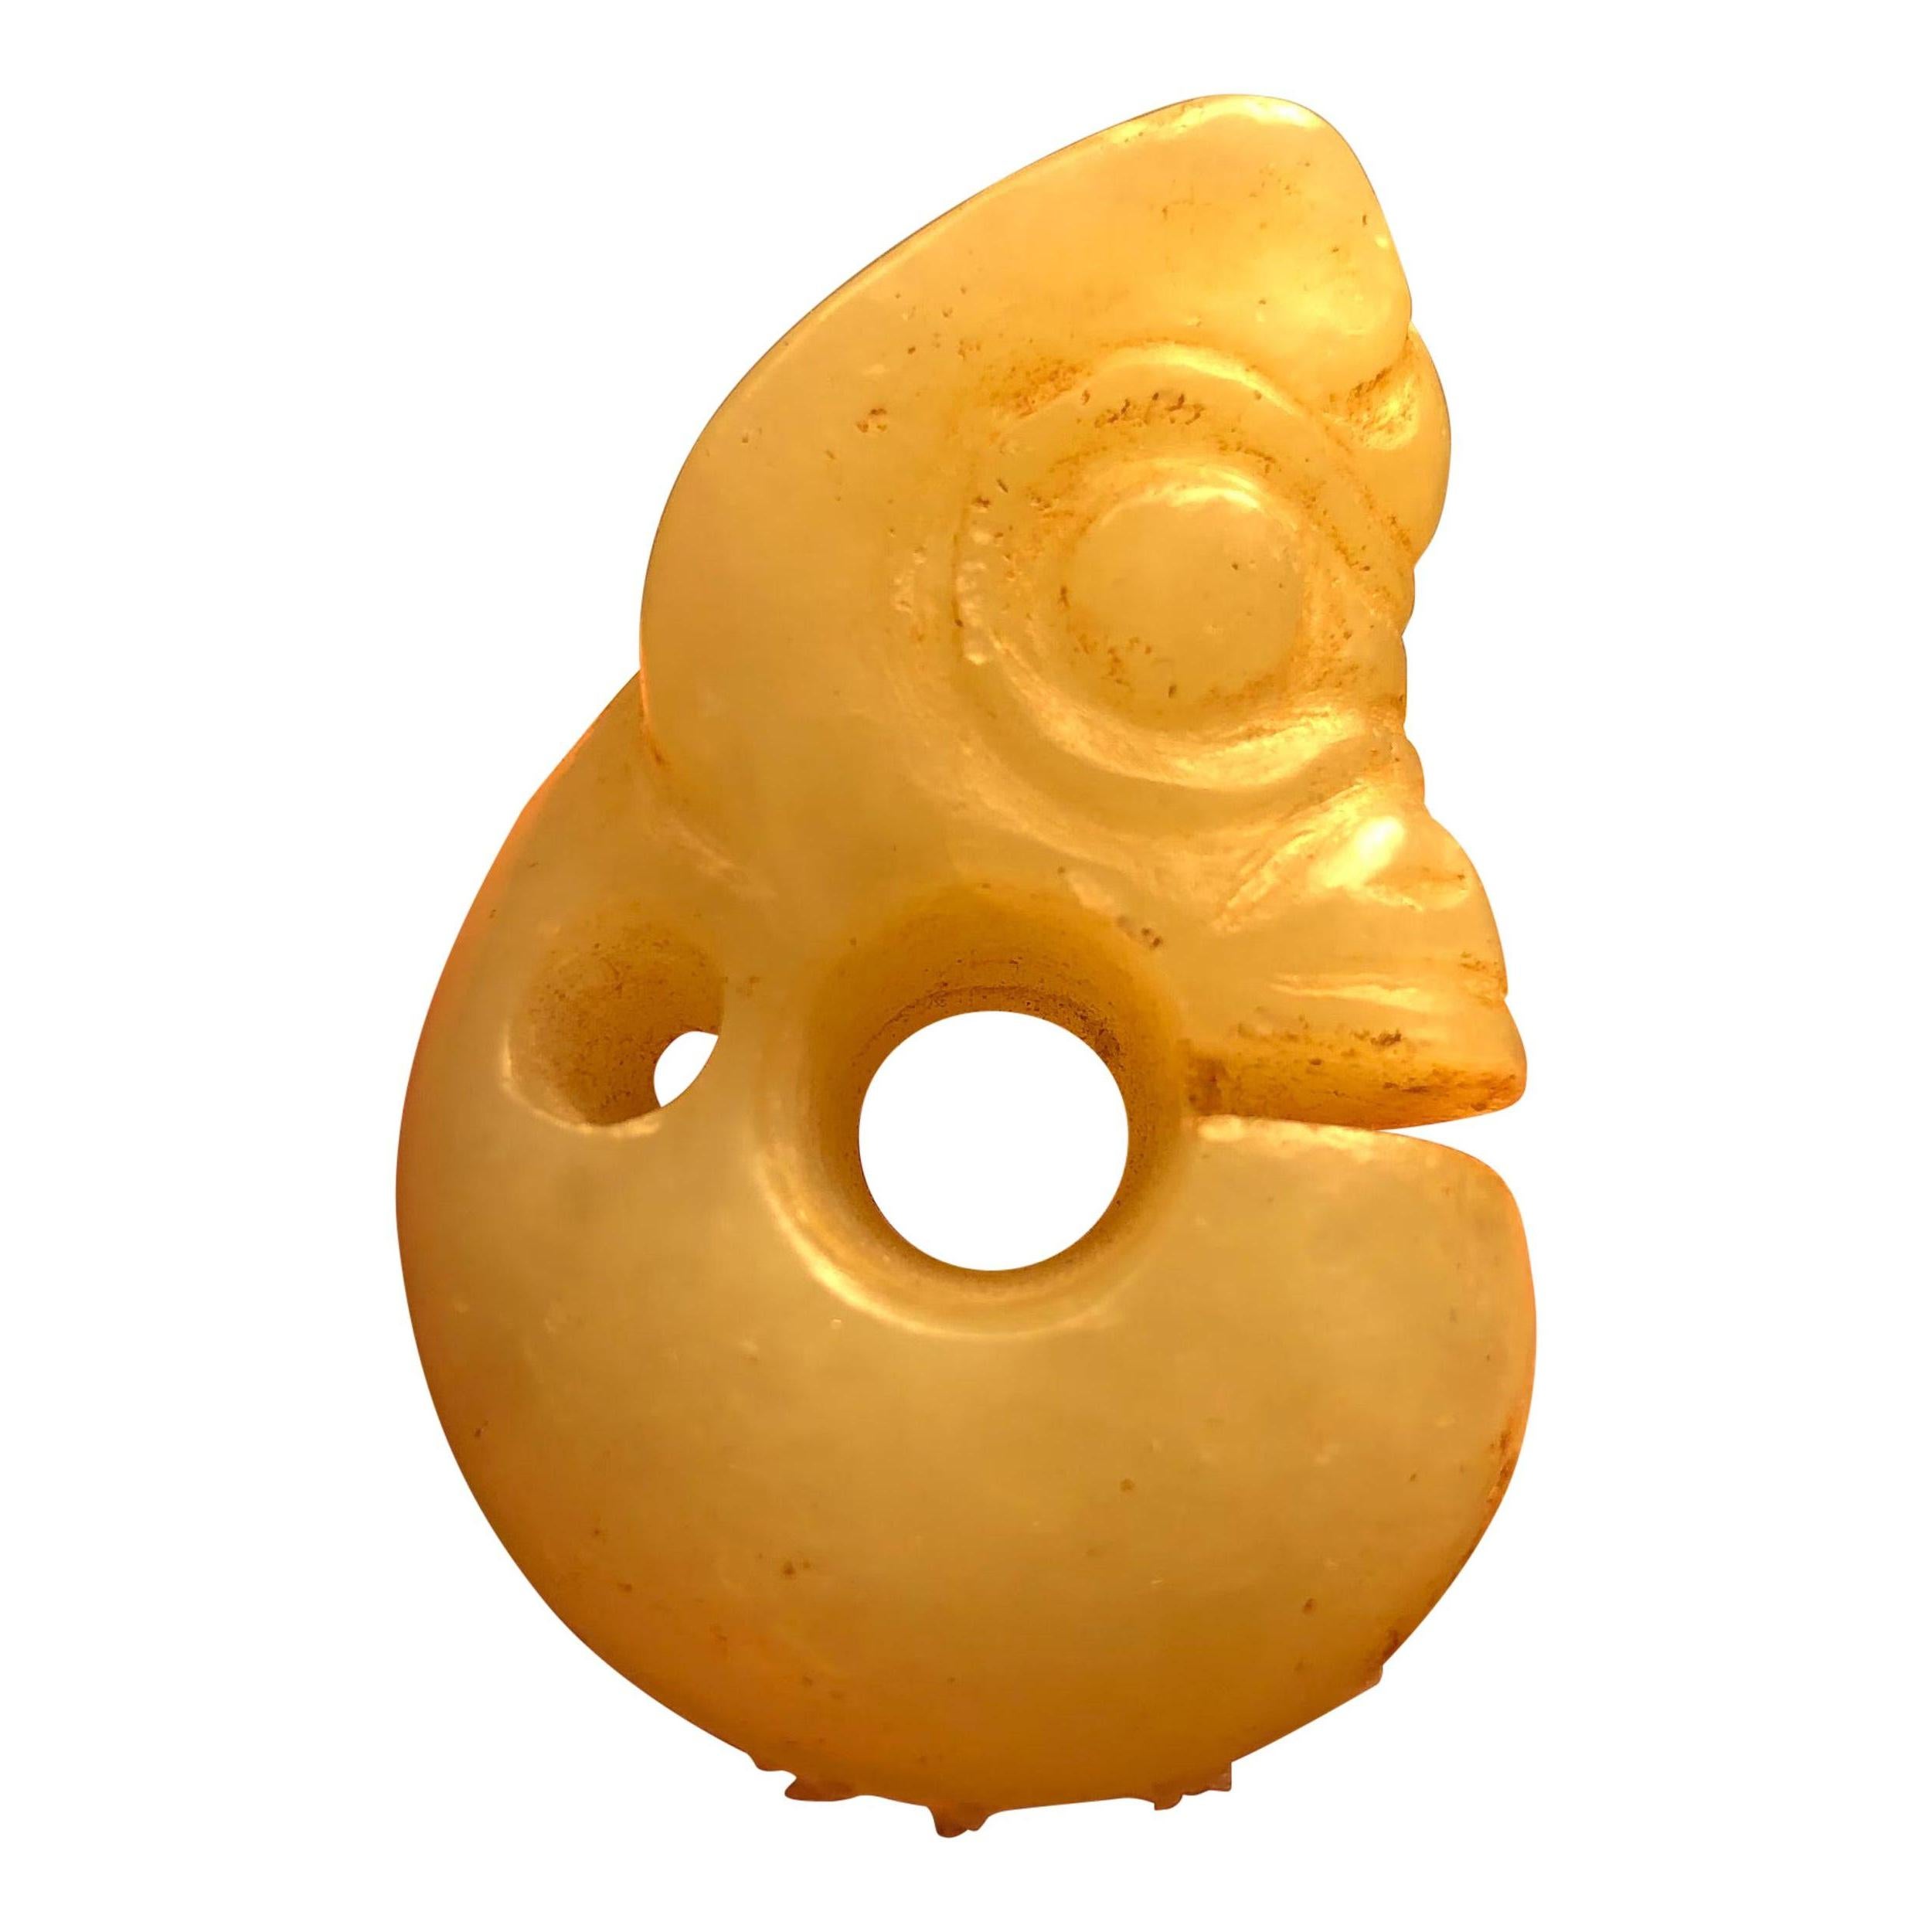 China Ancient Hongshan Culture Jade "Dragon" Ornament, 3500-3000 BC